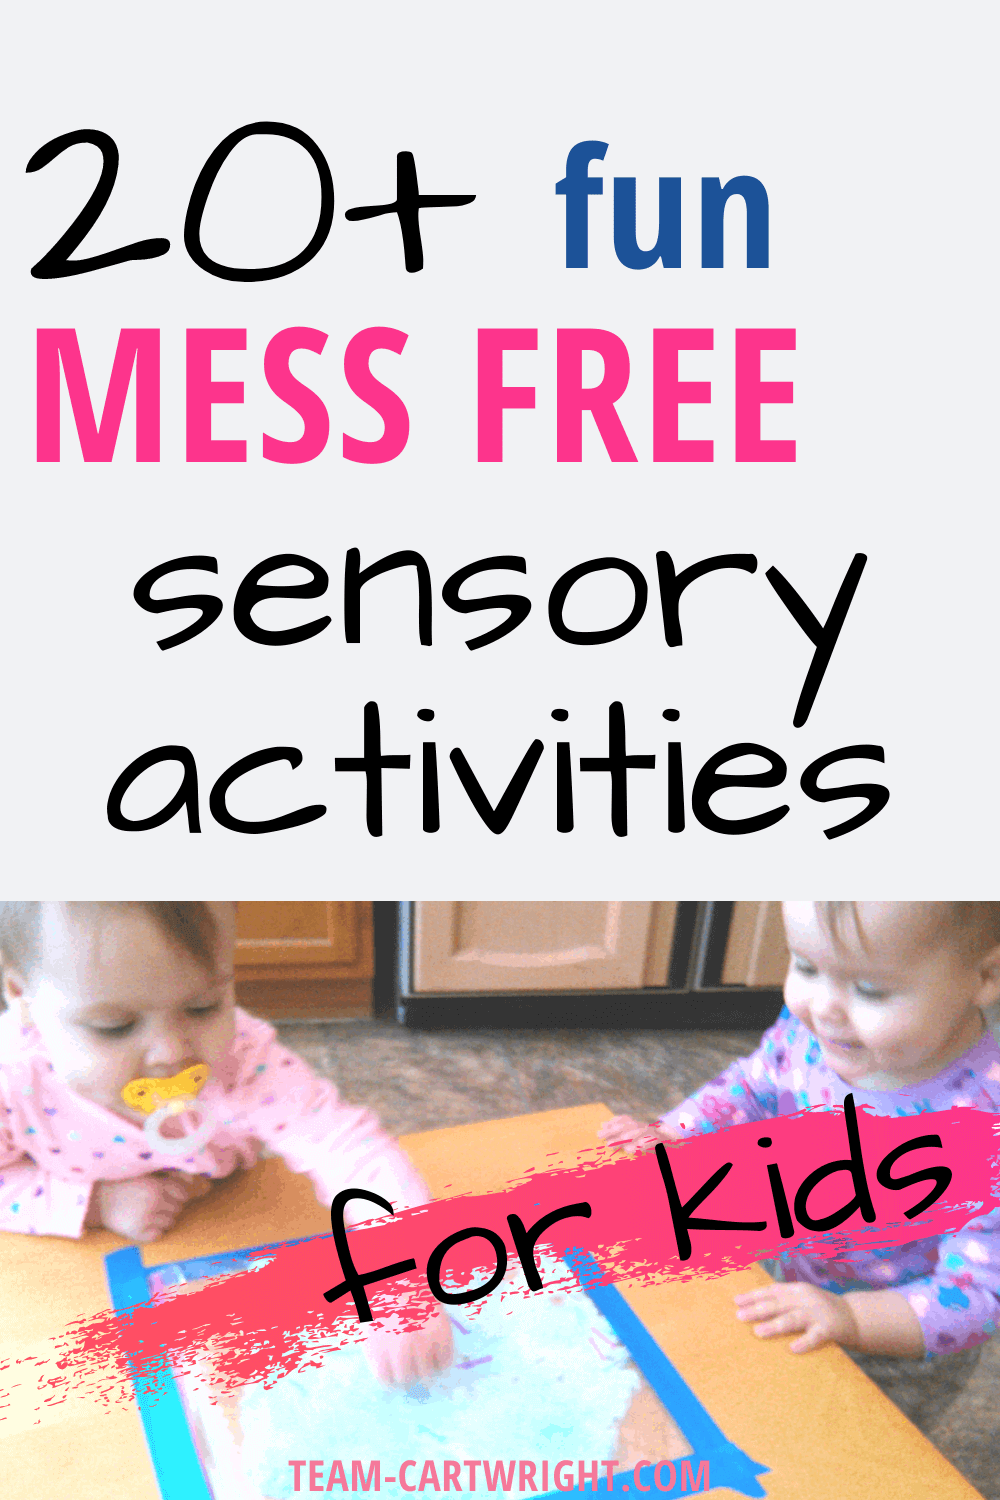 20+ fun mess free sensory activities for kids